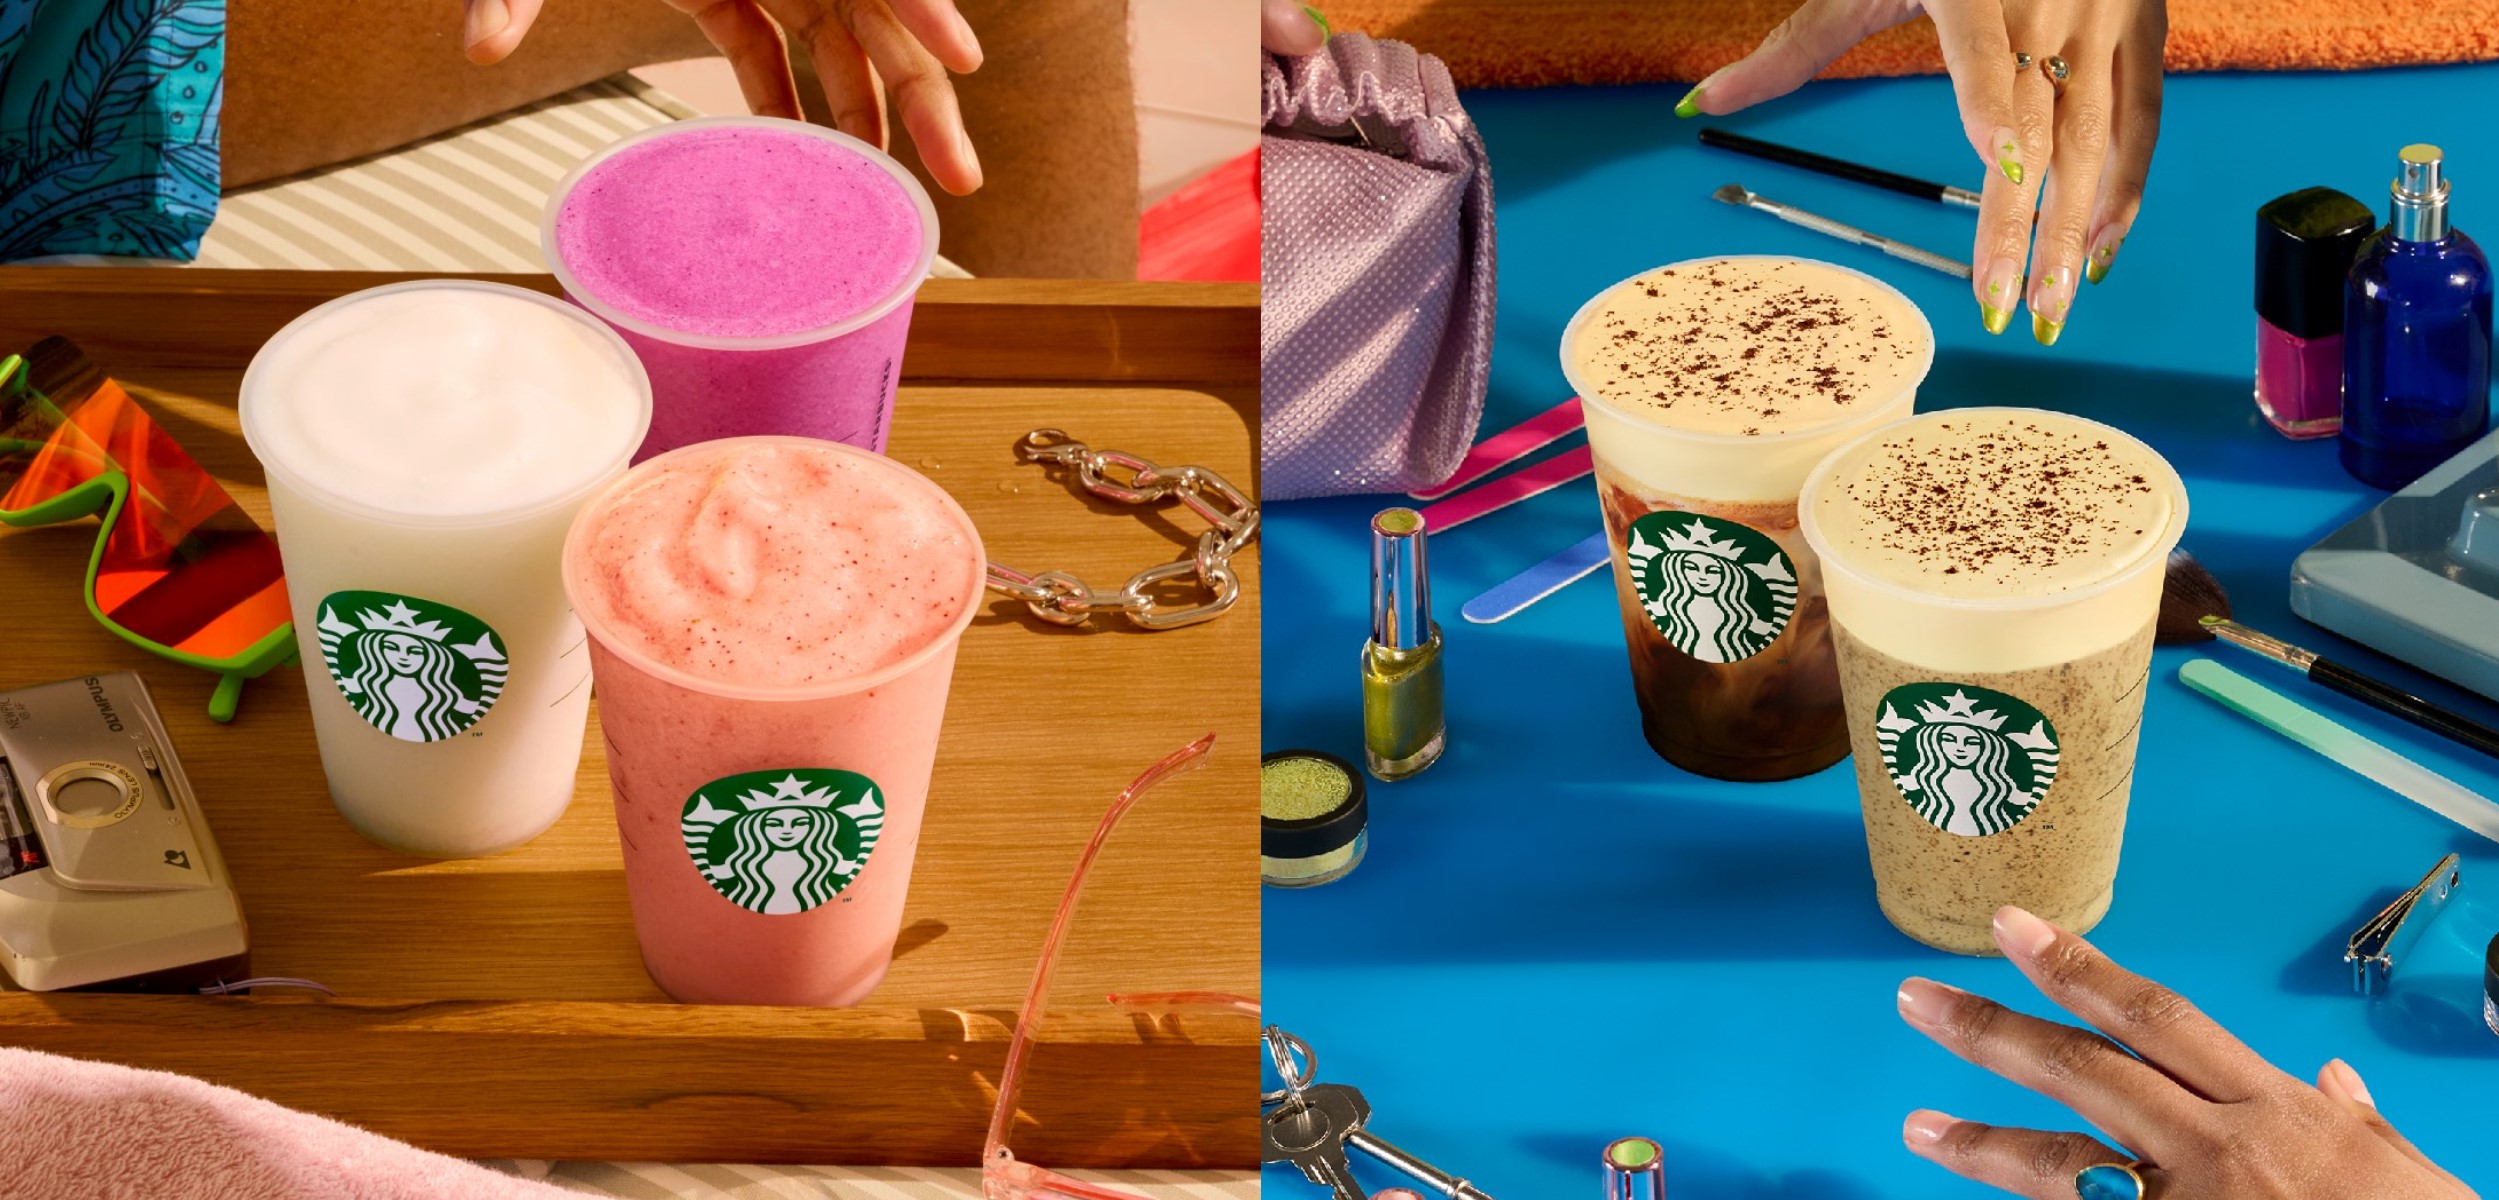 Starbucks lanceert ijskoude zomerse drankjes